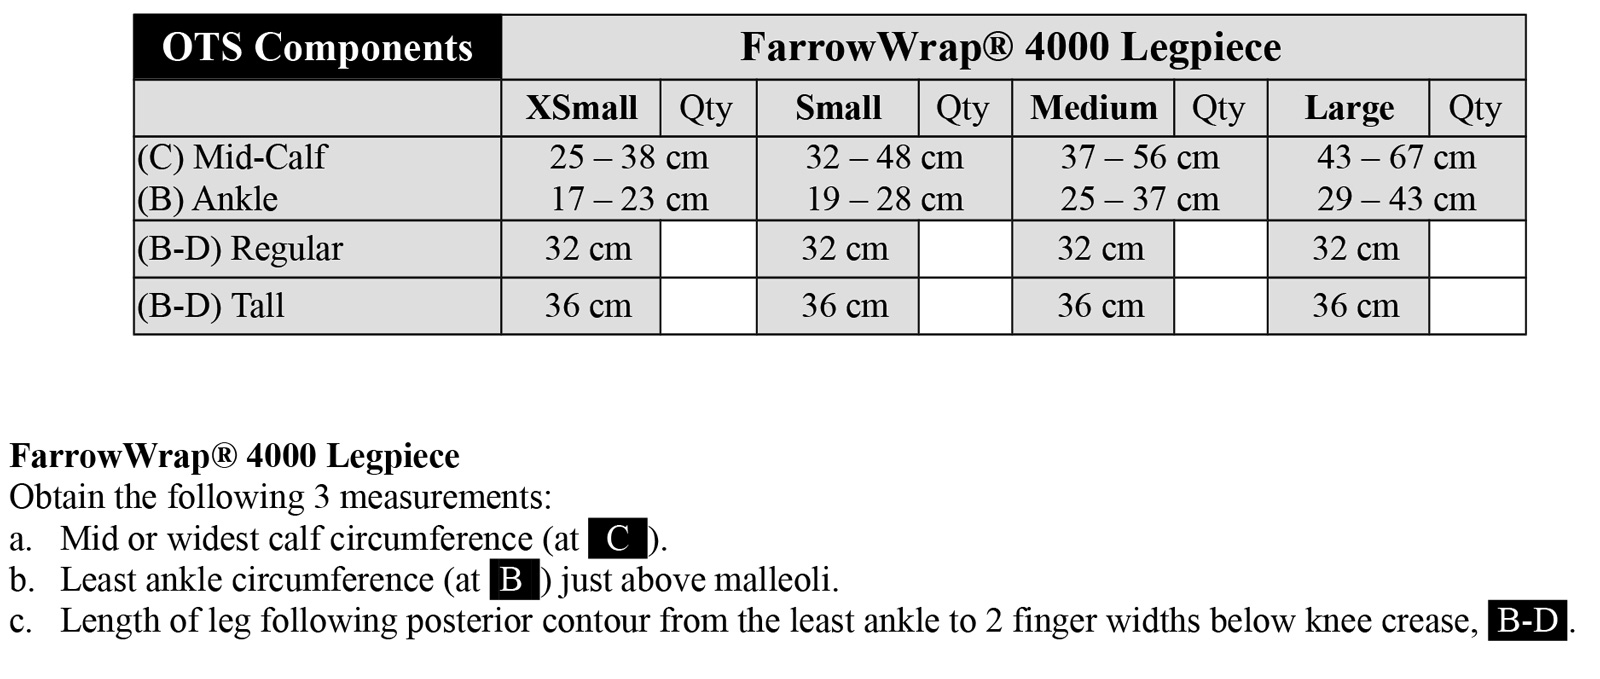 Farrow Wrap Sizing Chart